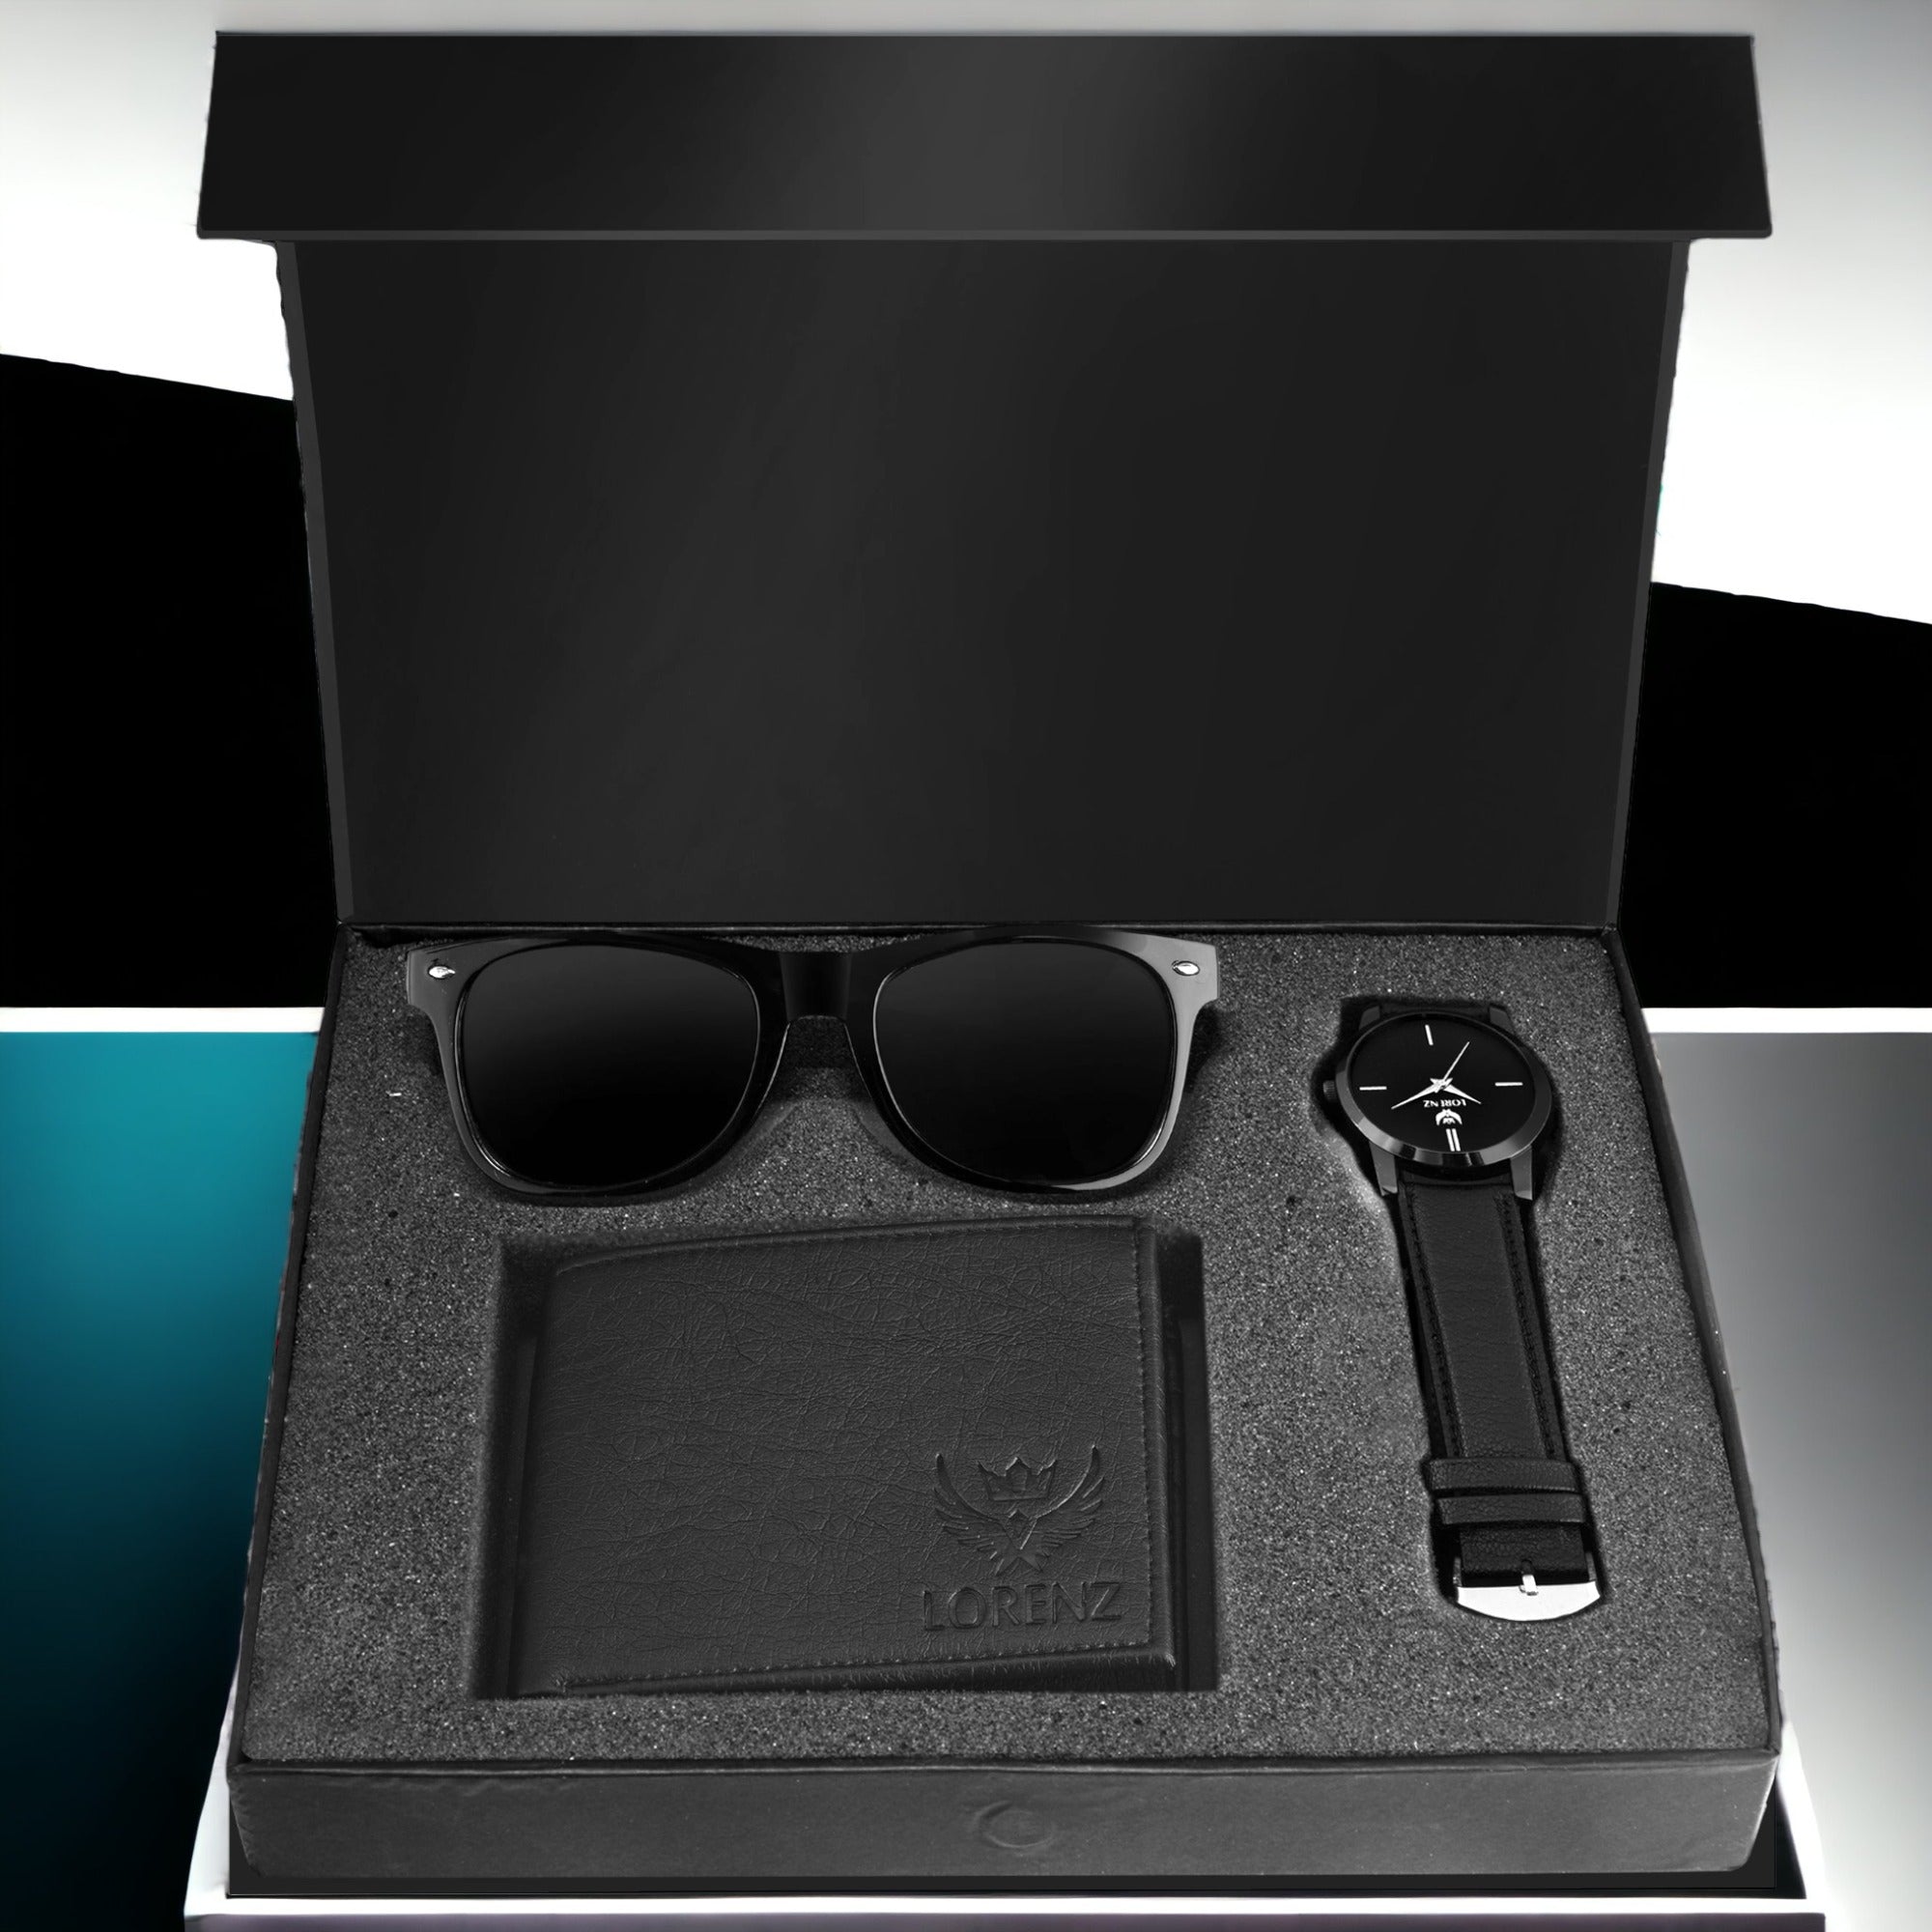 Lorenz Black Dial Watch, Wallet & Sunglasses Gift Set for Men